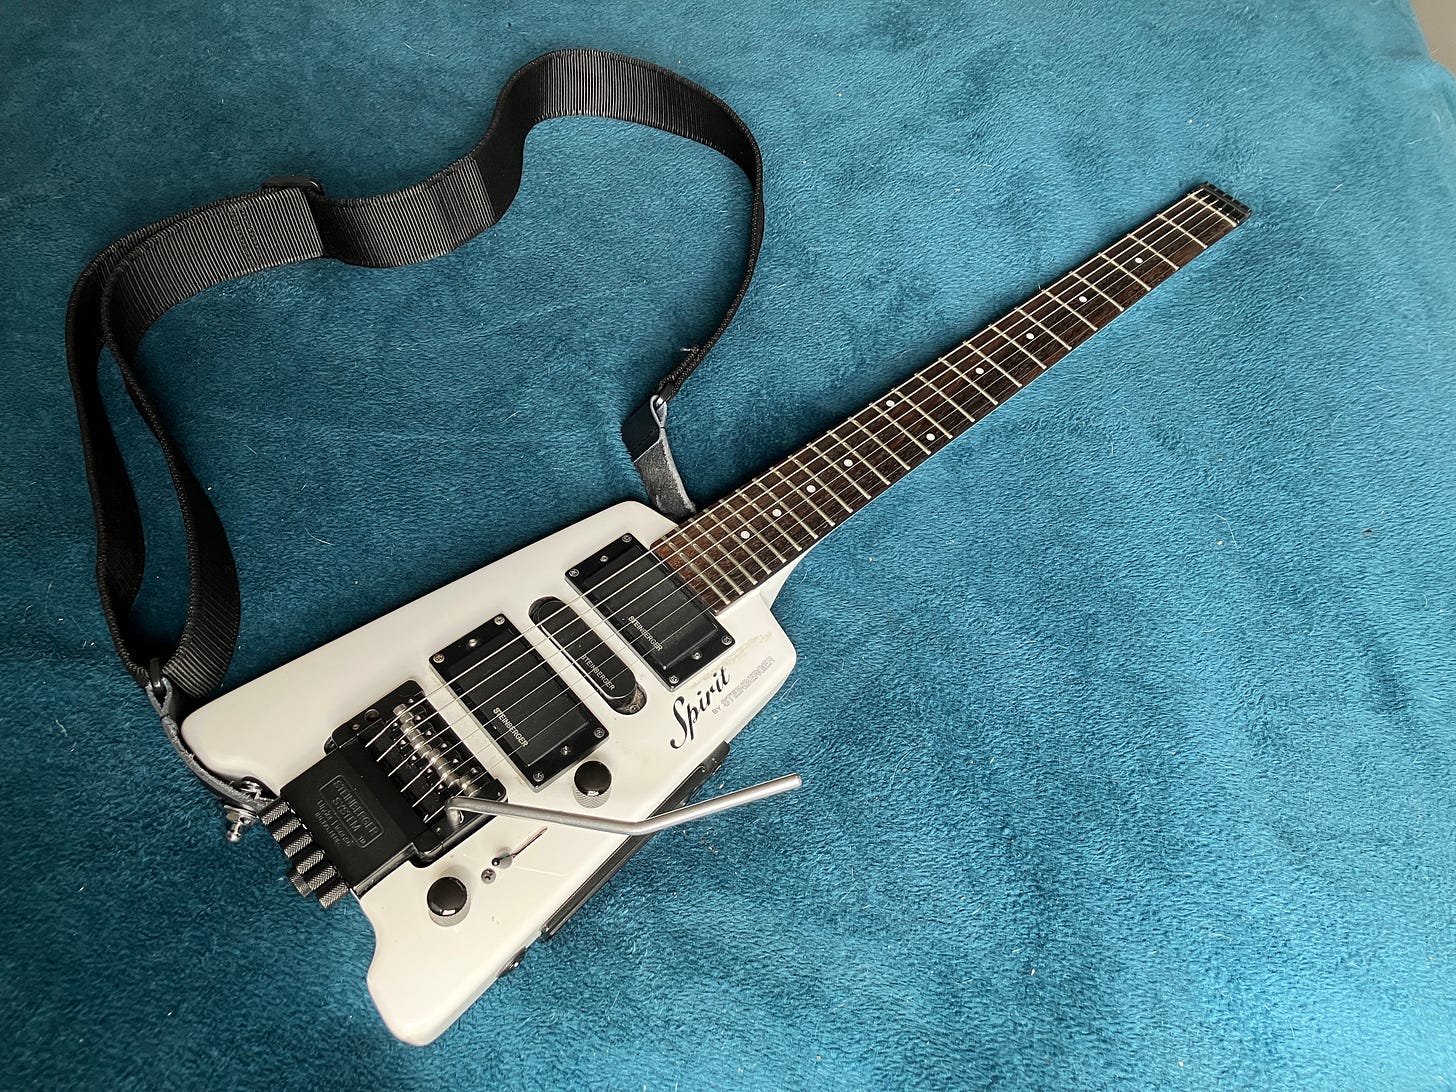 A white Steinberger Spirit headless guitar